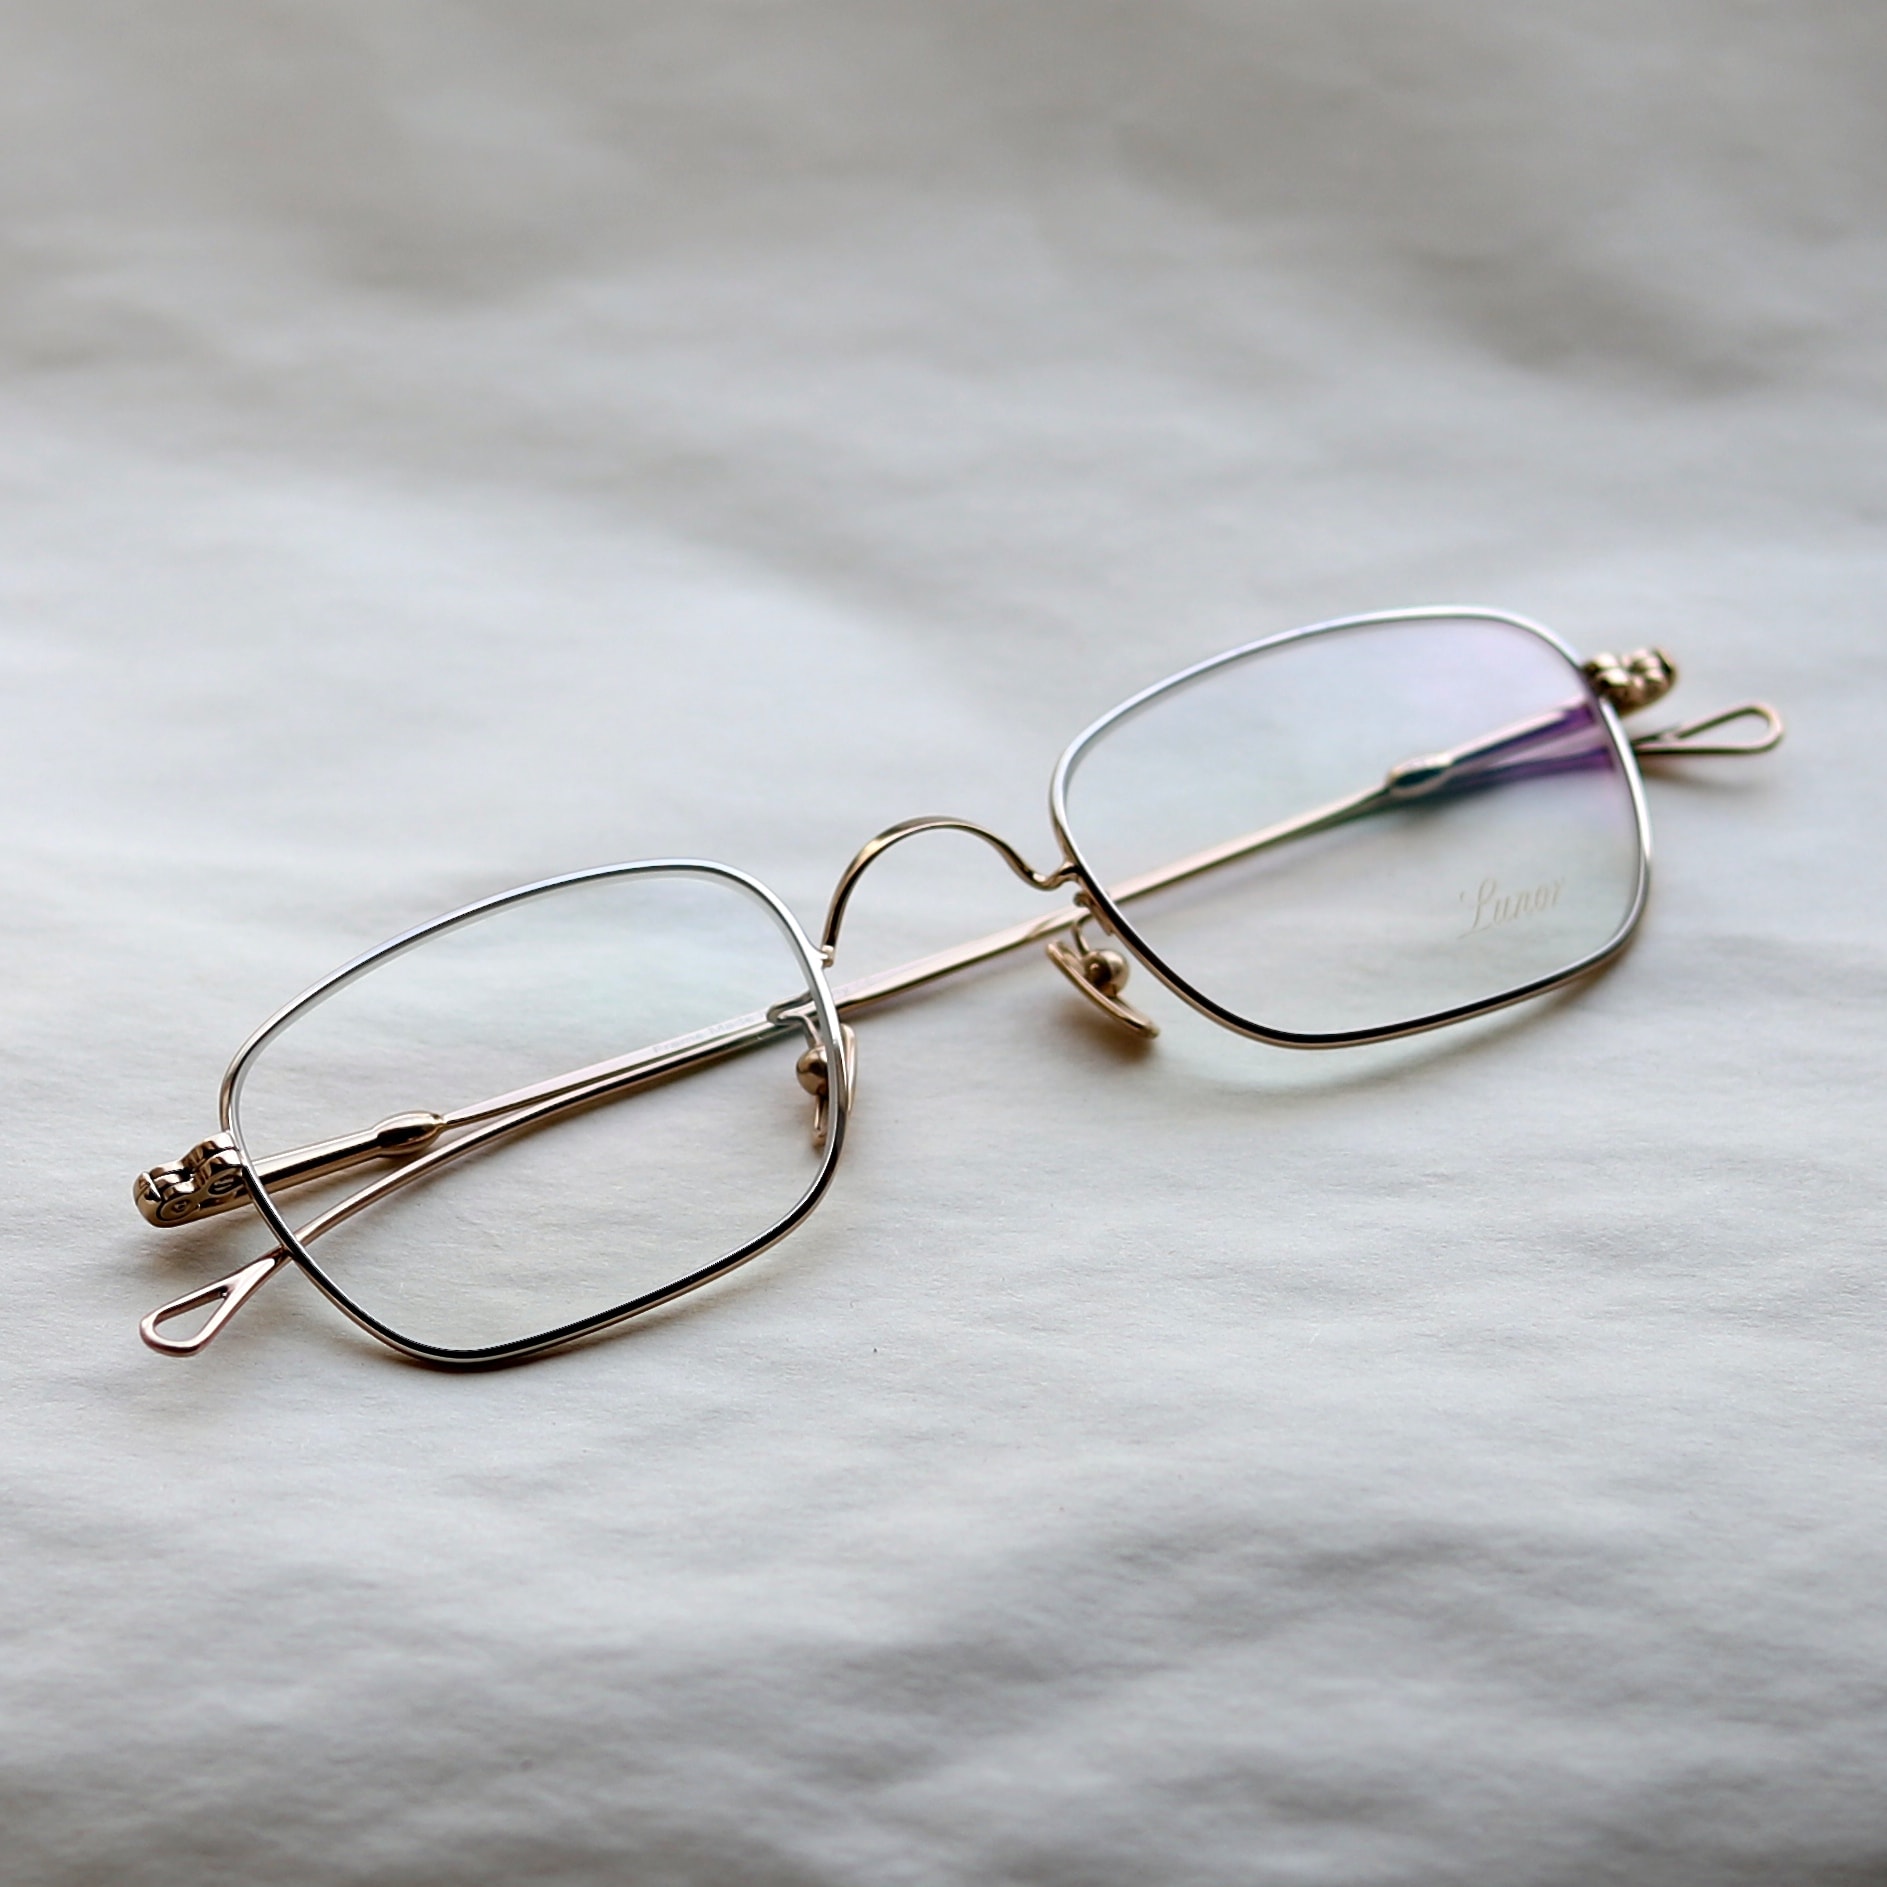 lunor ルノア メタルフレーム 眼鏡 メガネ ドイツ製 - サングラス/メガネ